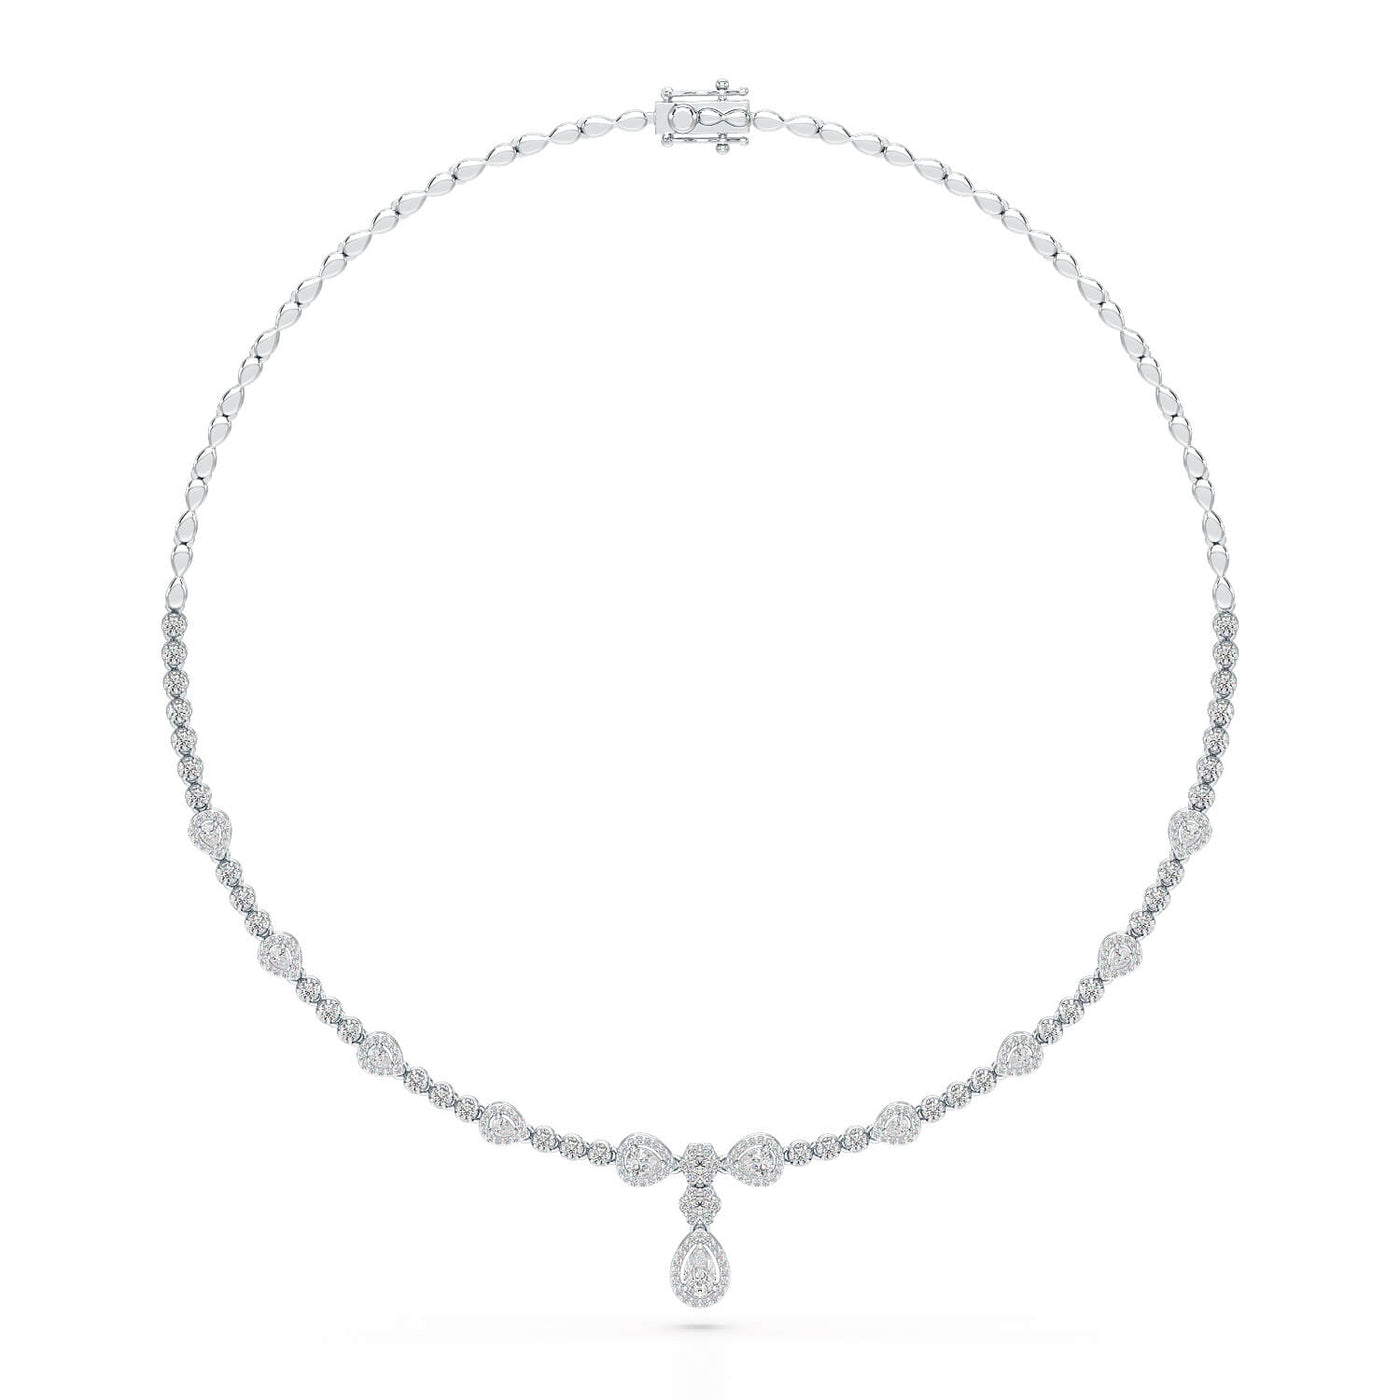 2.91 CT Pear Shape Lab Diamond Necklace